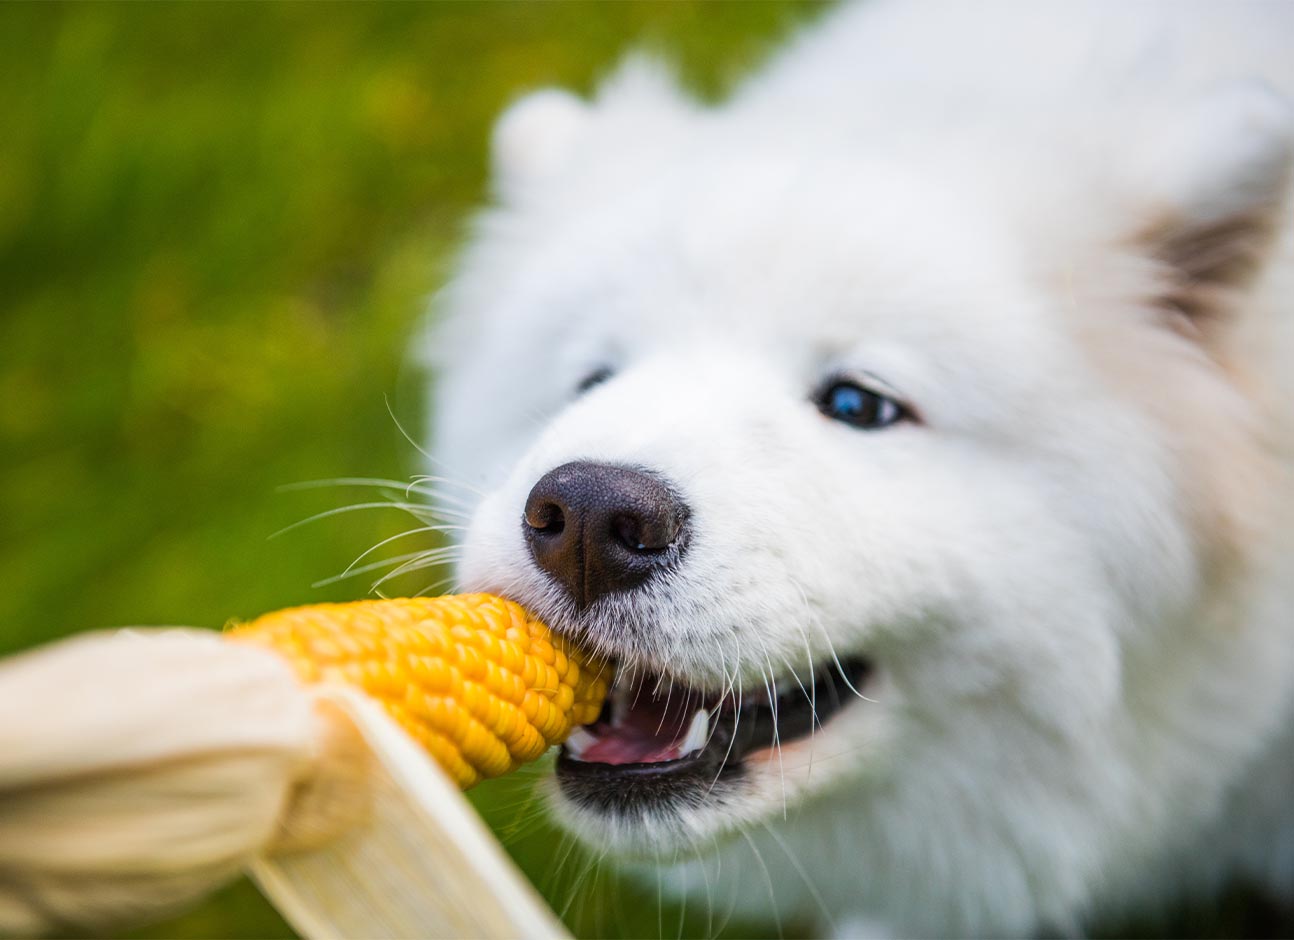 Dog eat corn